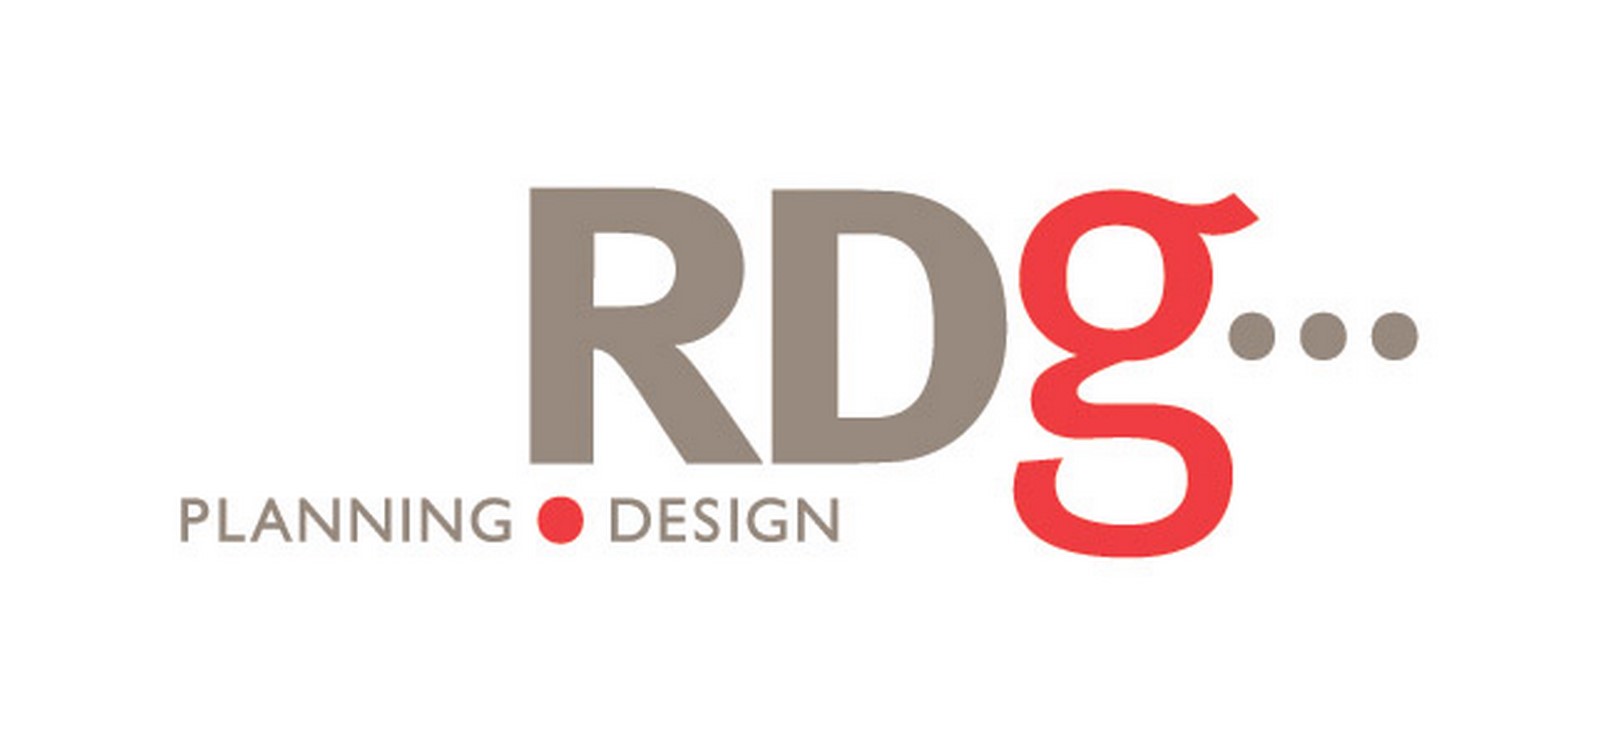 RDG - Sheet1